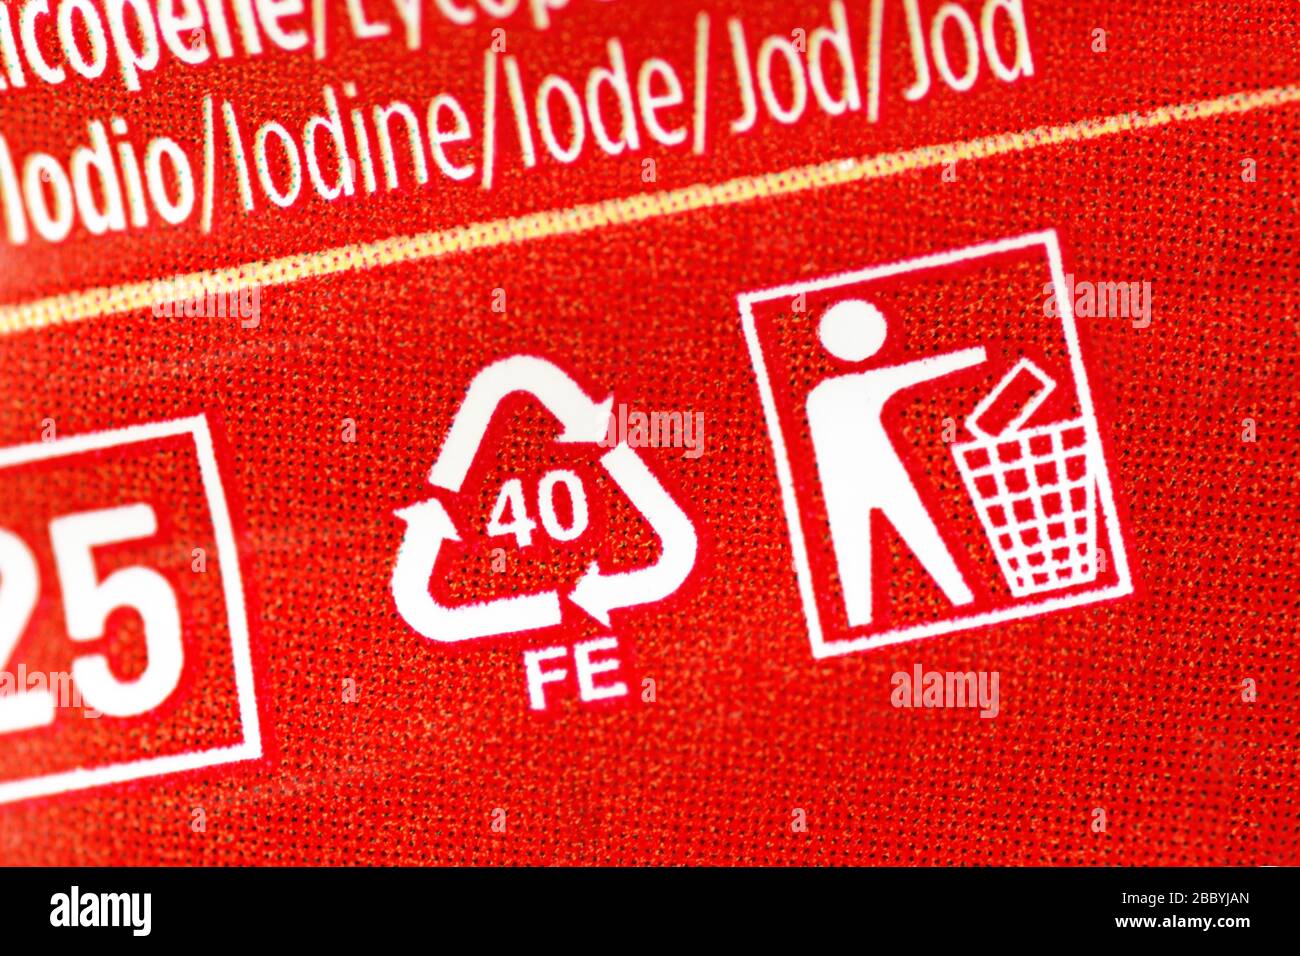 Close-up of aluminium recycling symbol 40 FE Stock Photo